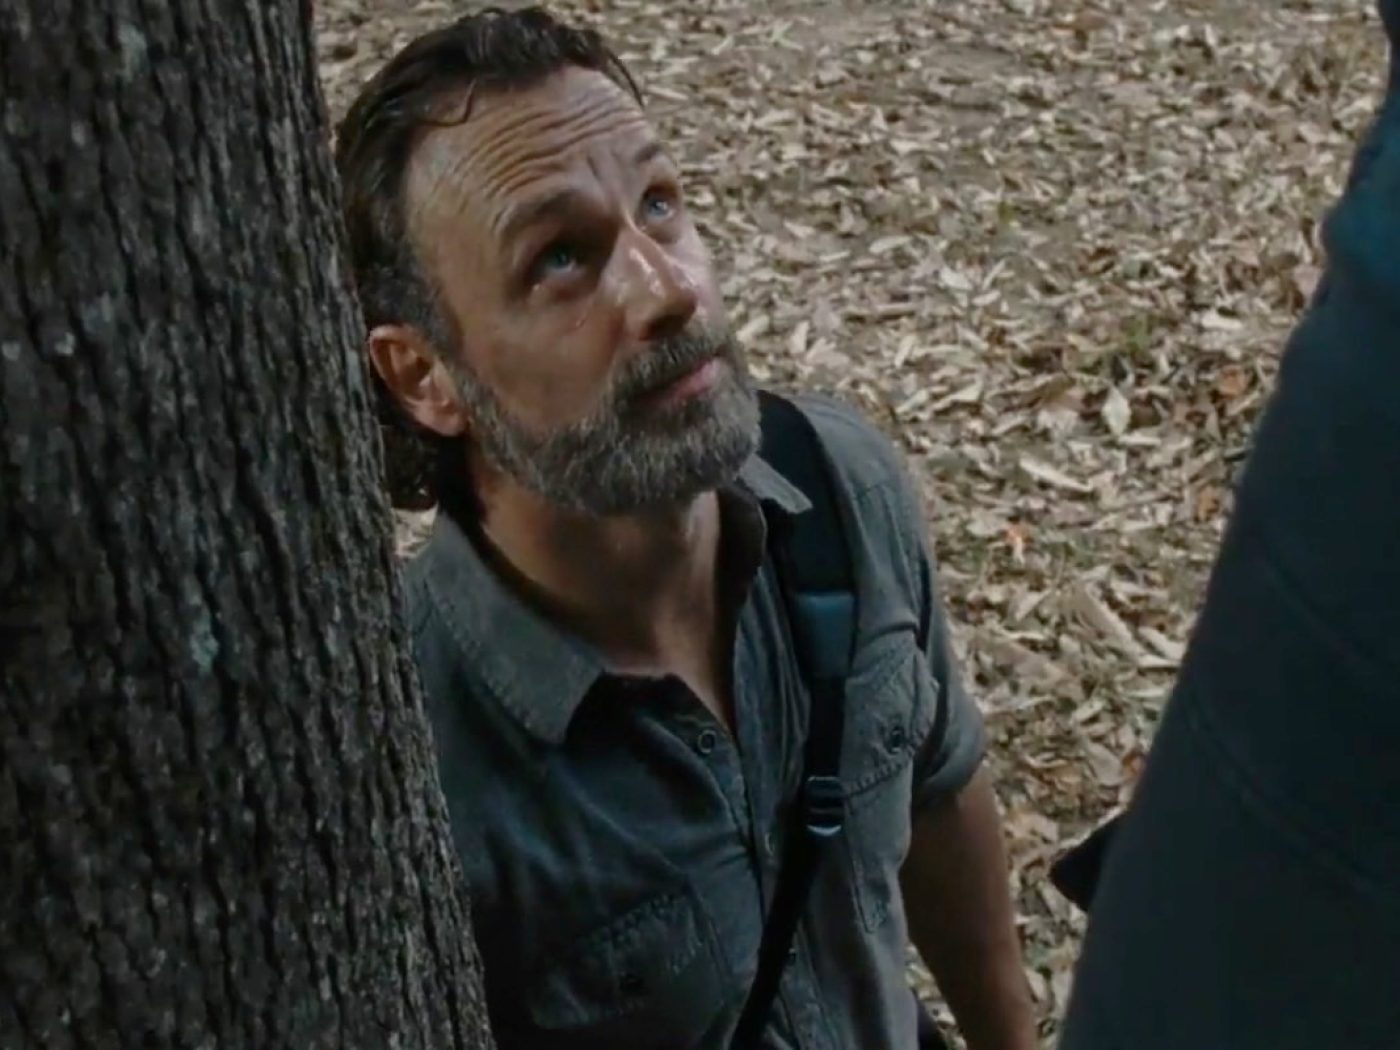 The Walking Dead: The Franchise's Greatest Hero is Negan, Not Rick